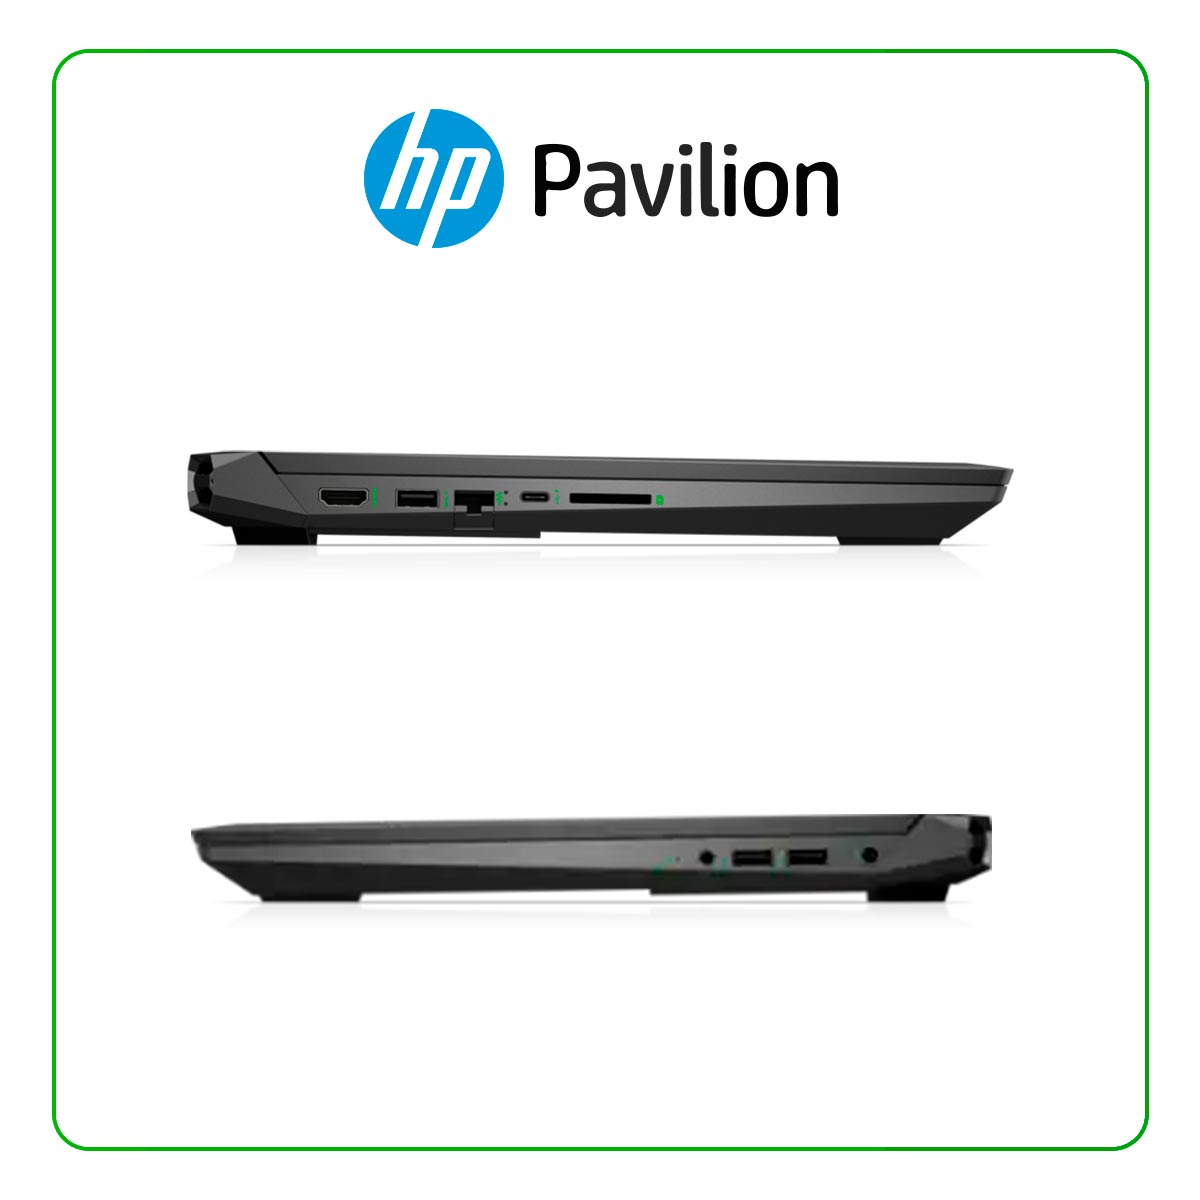 LAPTOP HP PAVILION GAMING 15-DK0006LA INTEL CORE I7 9750H / 12GB RAM / 128GB SSD + 1TB HDD / 15.6” FHD (1920X1080) / NVIDIA GTX 1650 4GB / WINDOWS 10 HOME